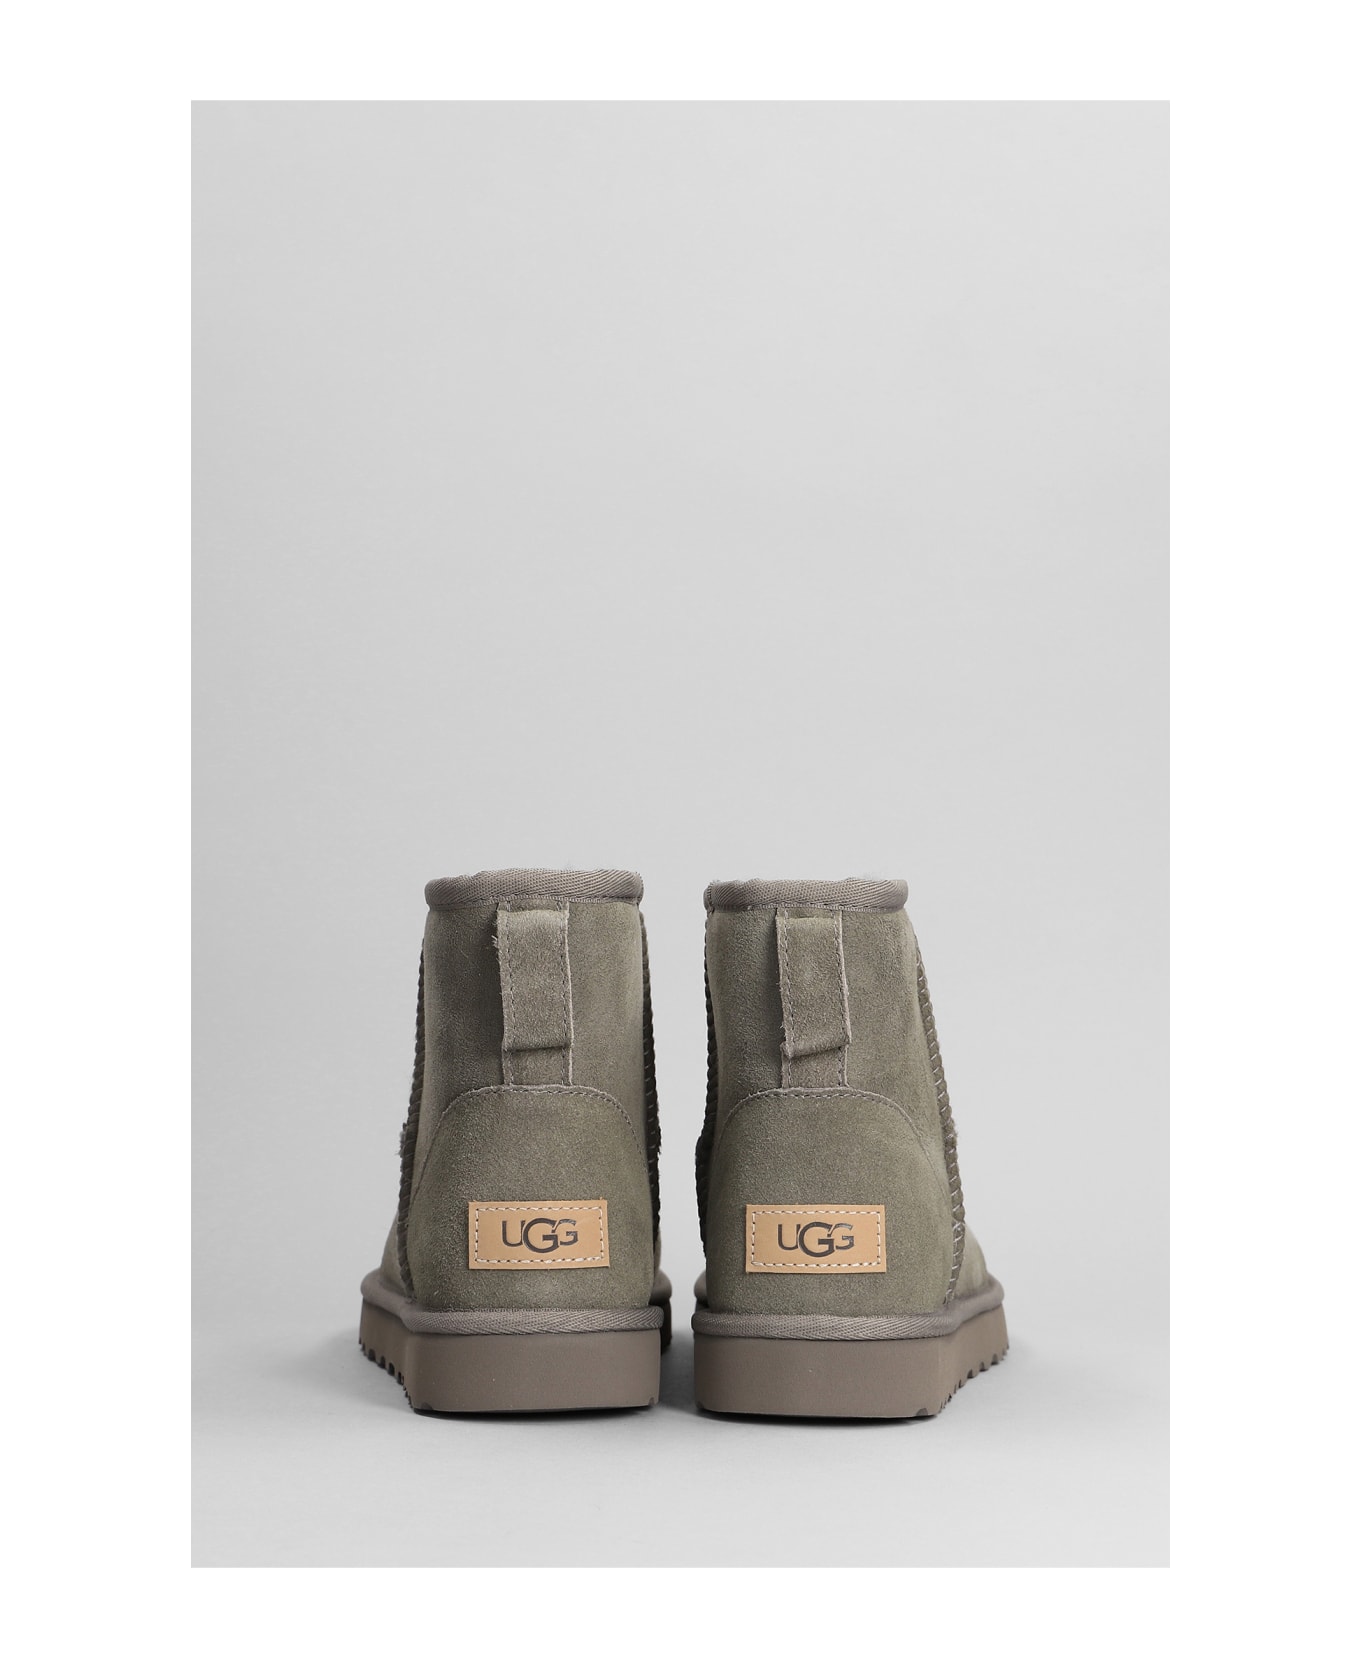 UGG Classic Mini Ii Low Heels Ankle Boots In Grey Suede - Smoke plum